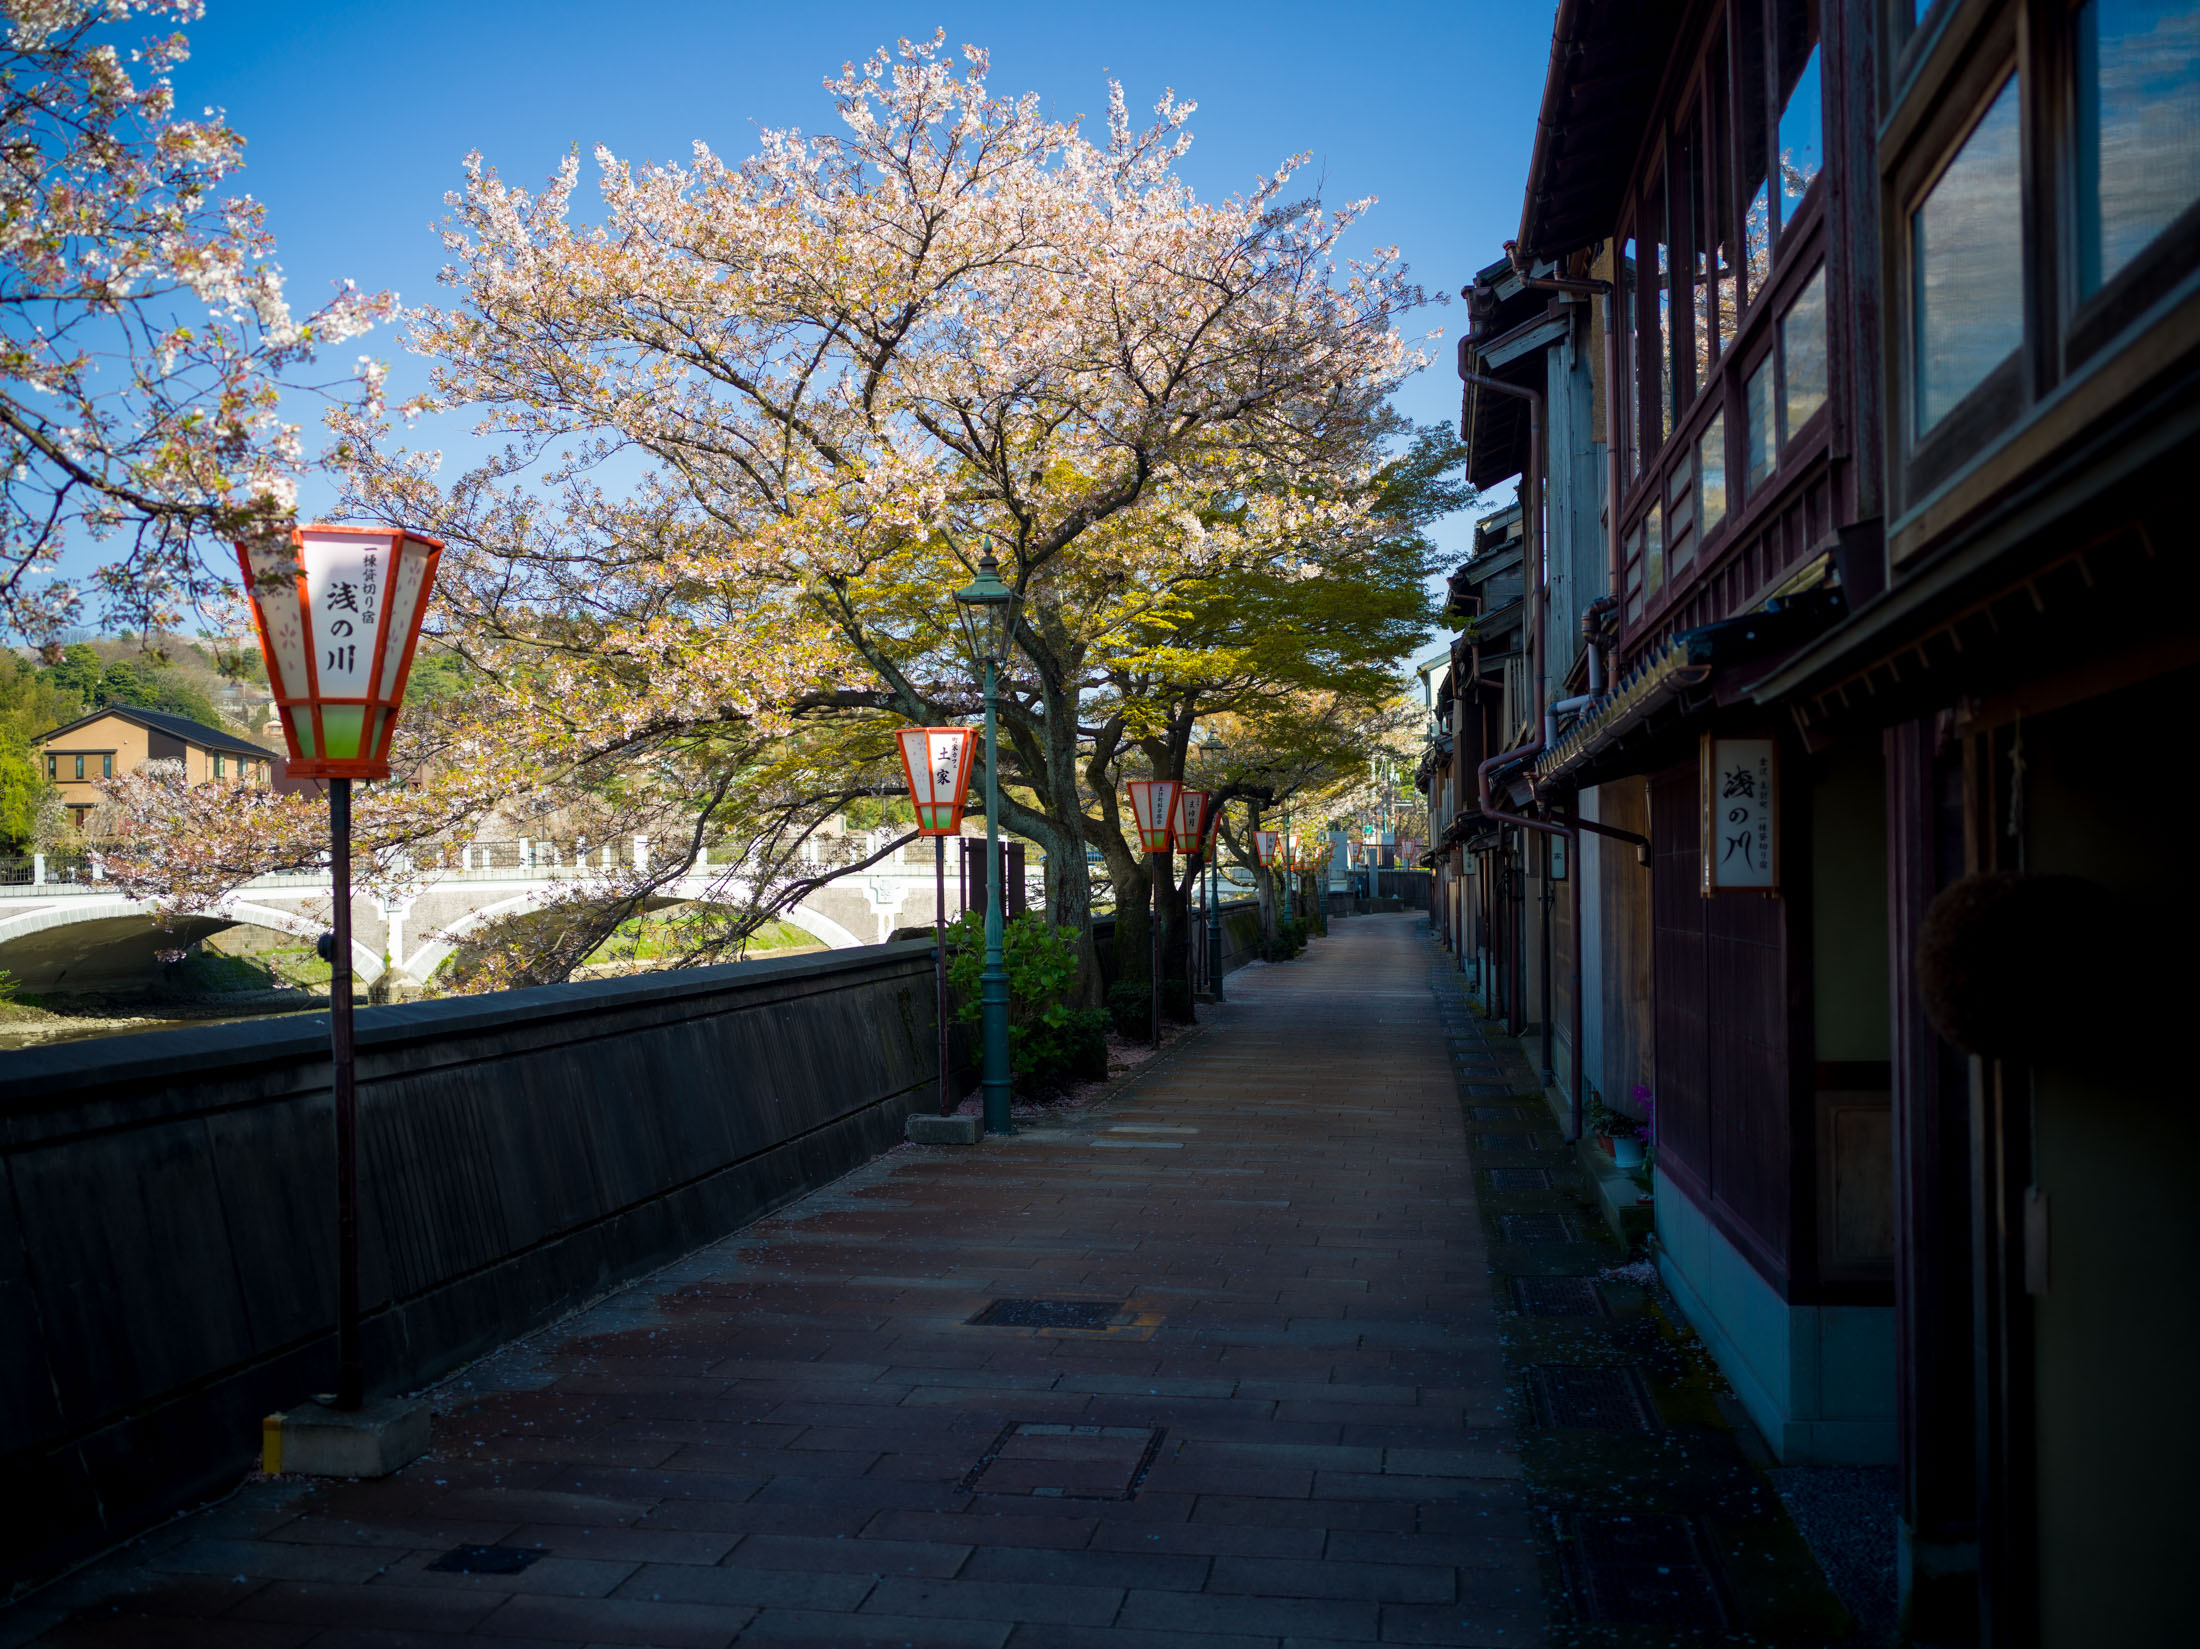 Kanazawas Cherry Blossom-Lined Geisha District Street